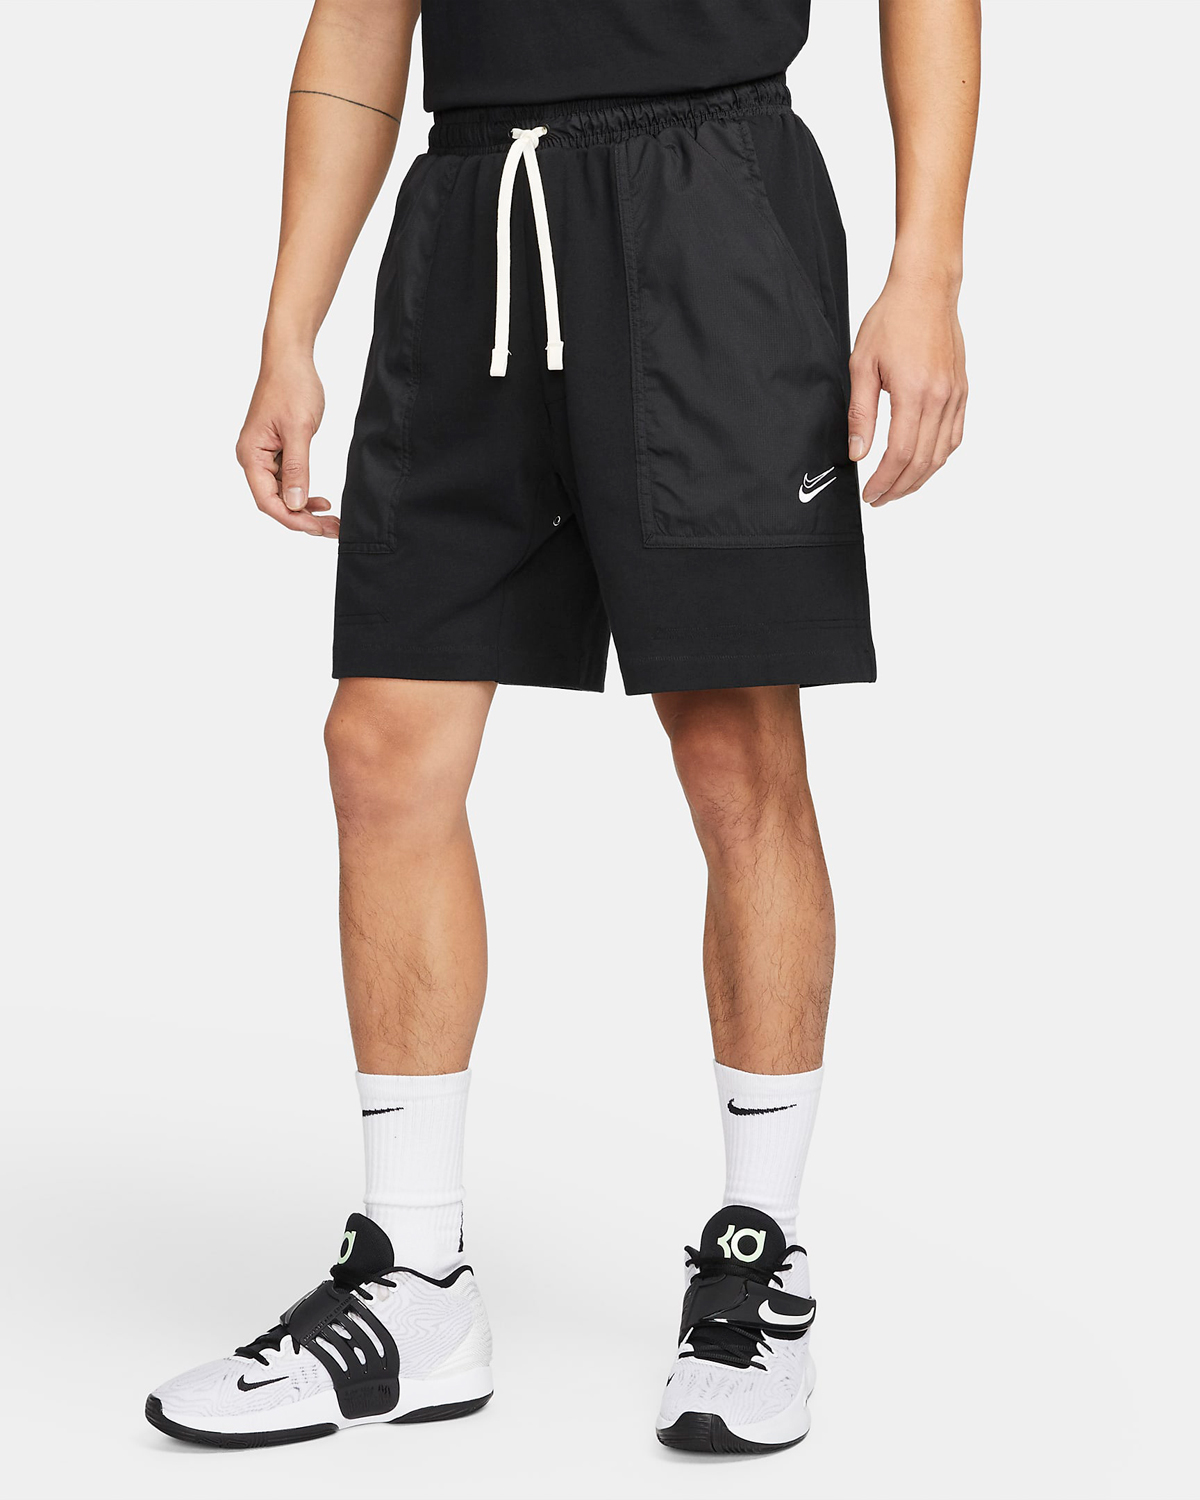 Nike-KD-Kevin-Durant-Fleece-Basketball-Shorts-Black-White-1